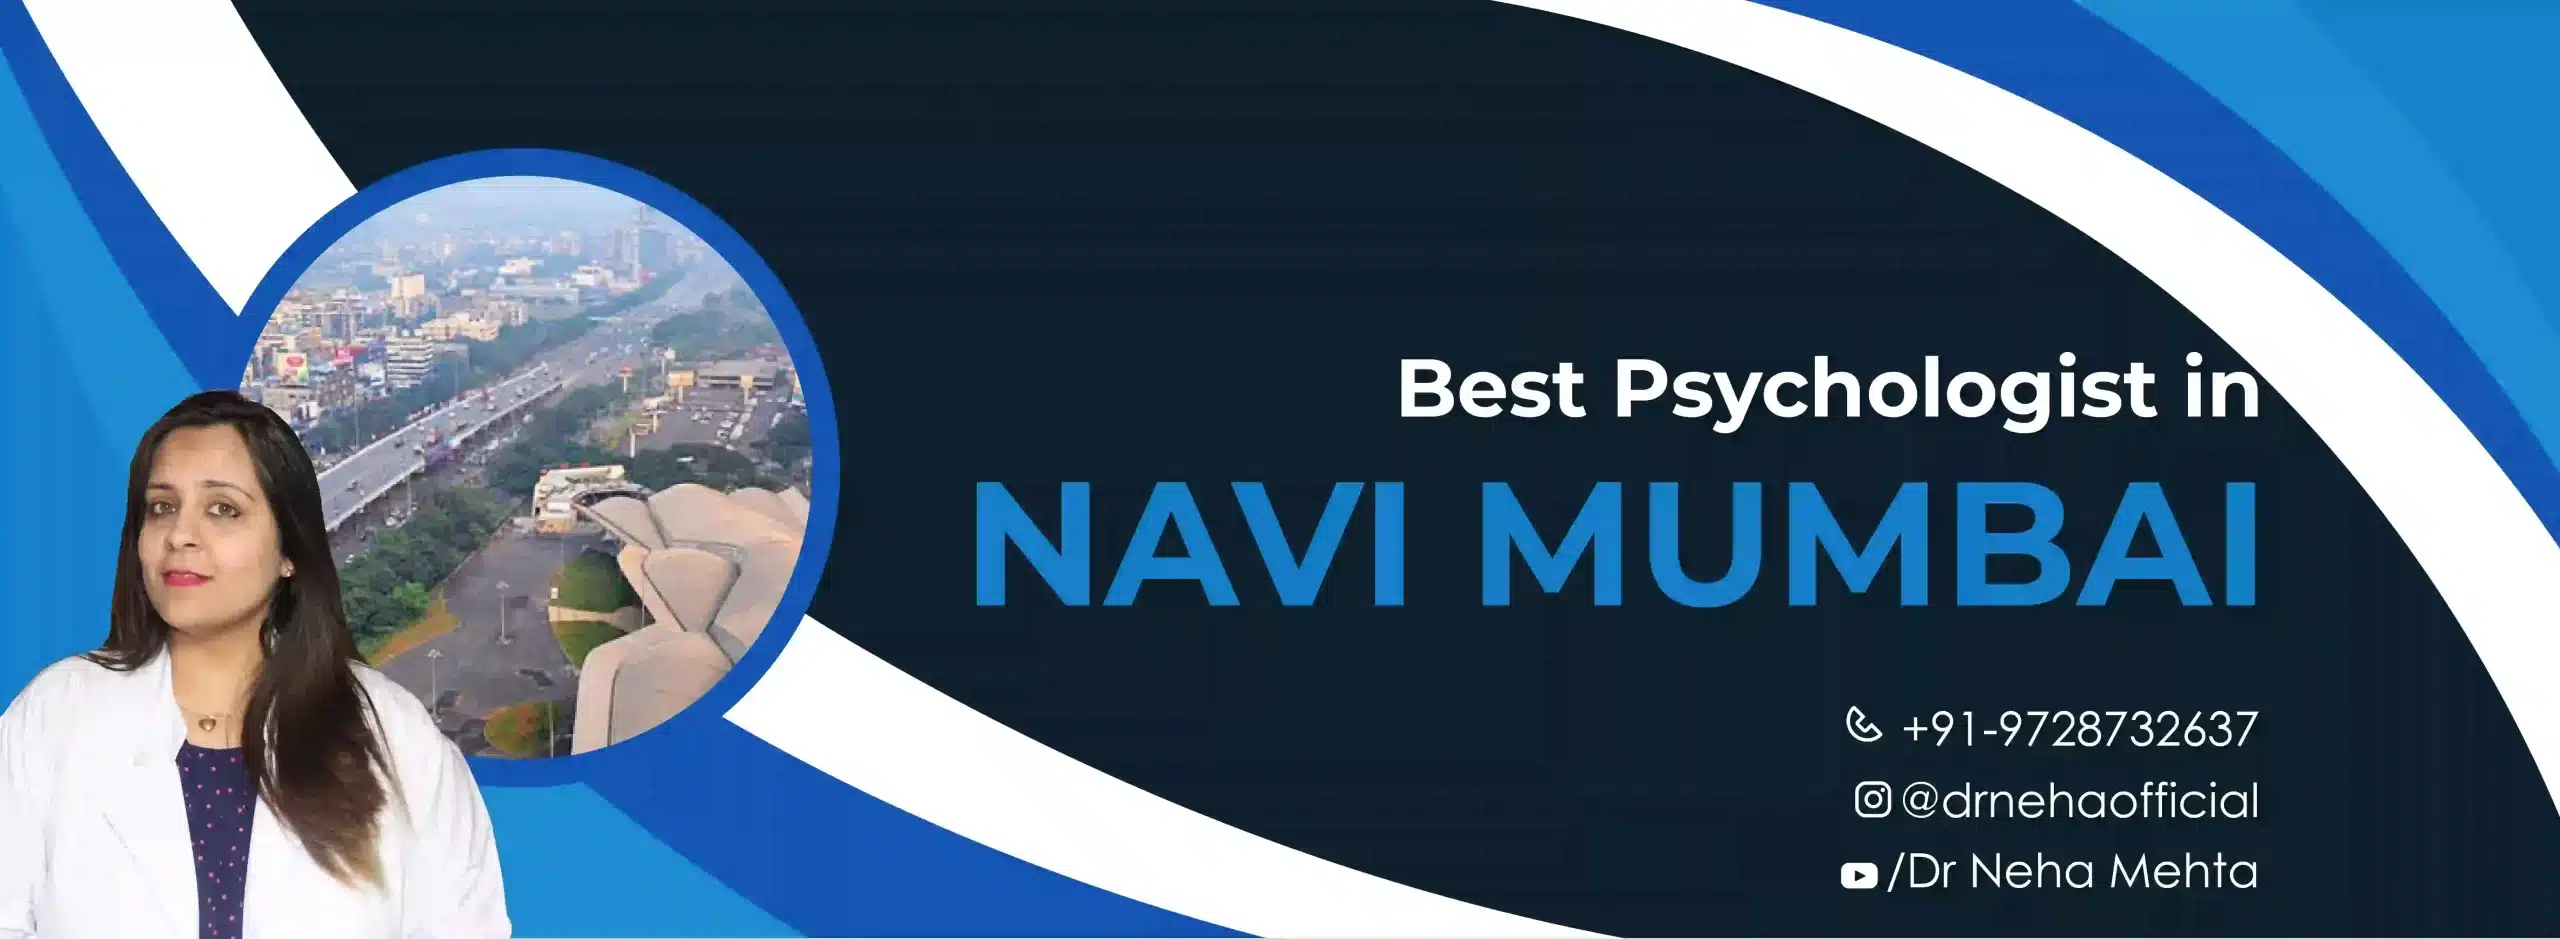 Best Psychologist in Navi Mumbai, India | Counselling Psychologist in Navi Mumbai| Dr. Neha Mehta